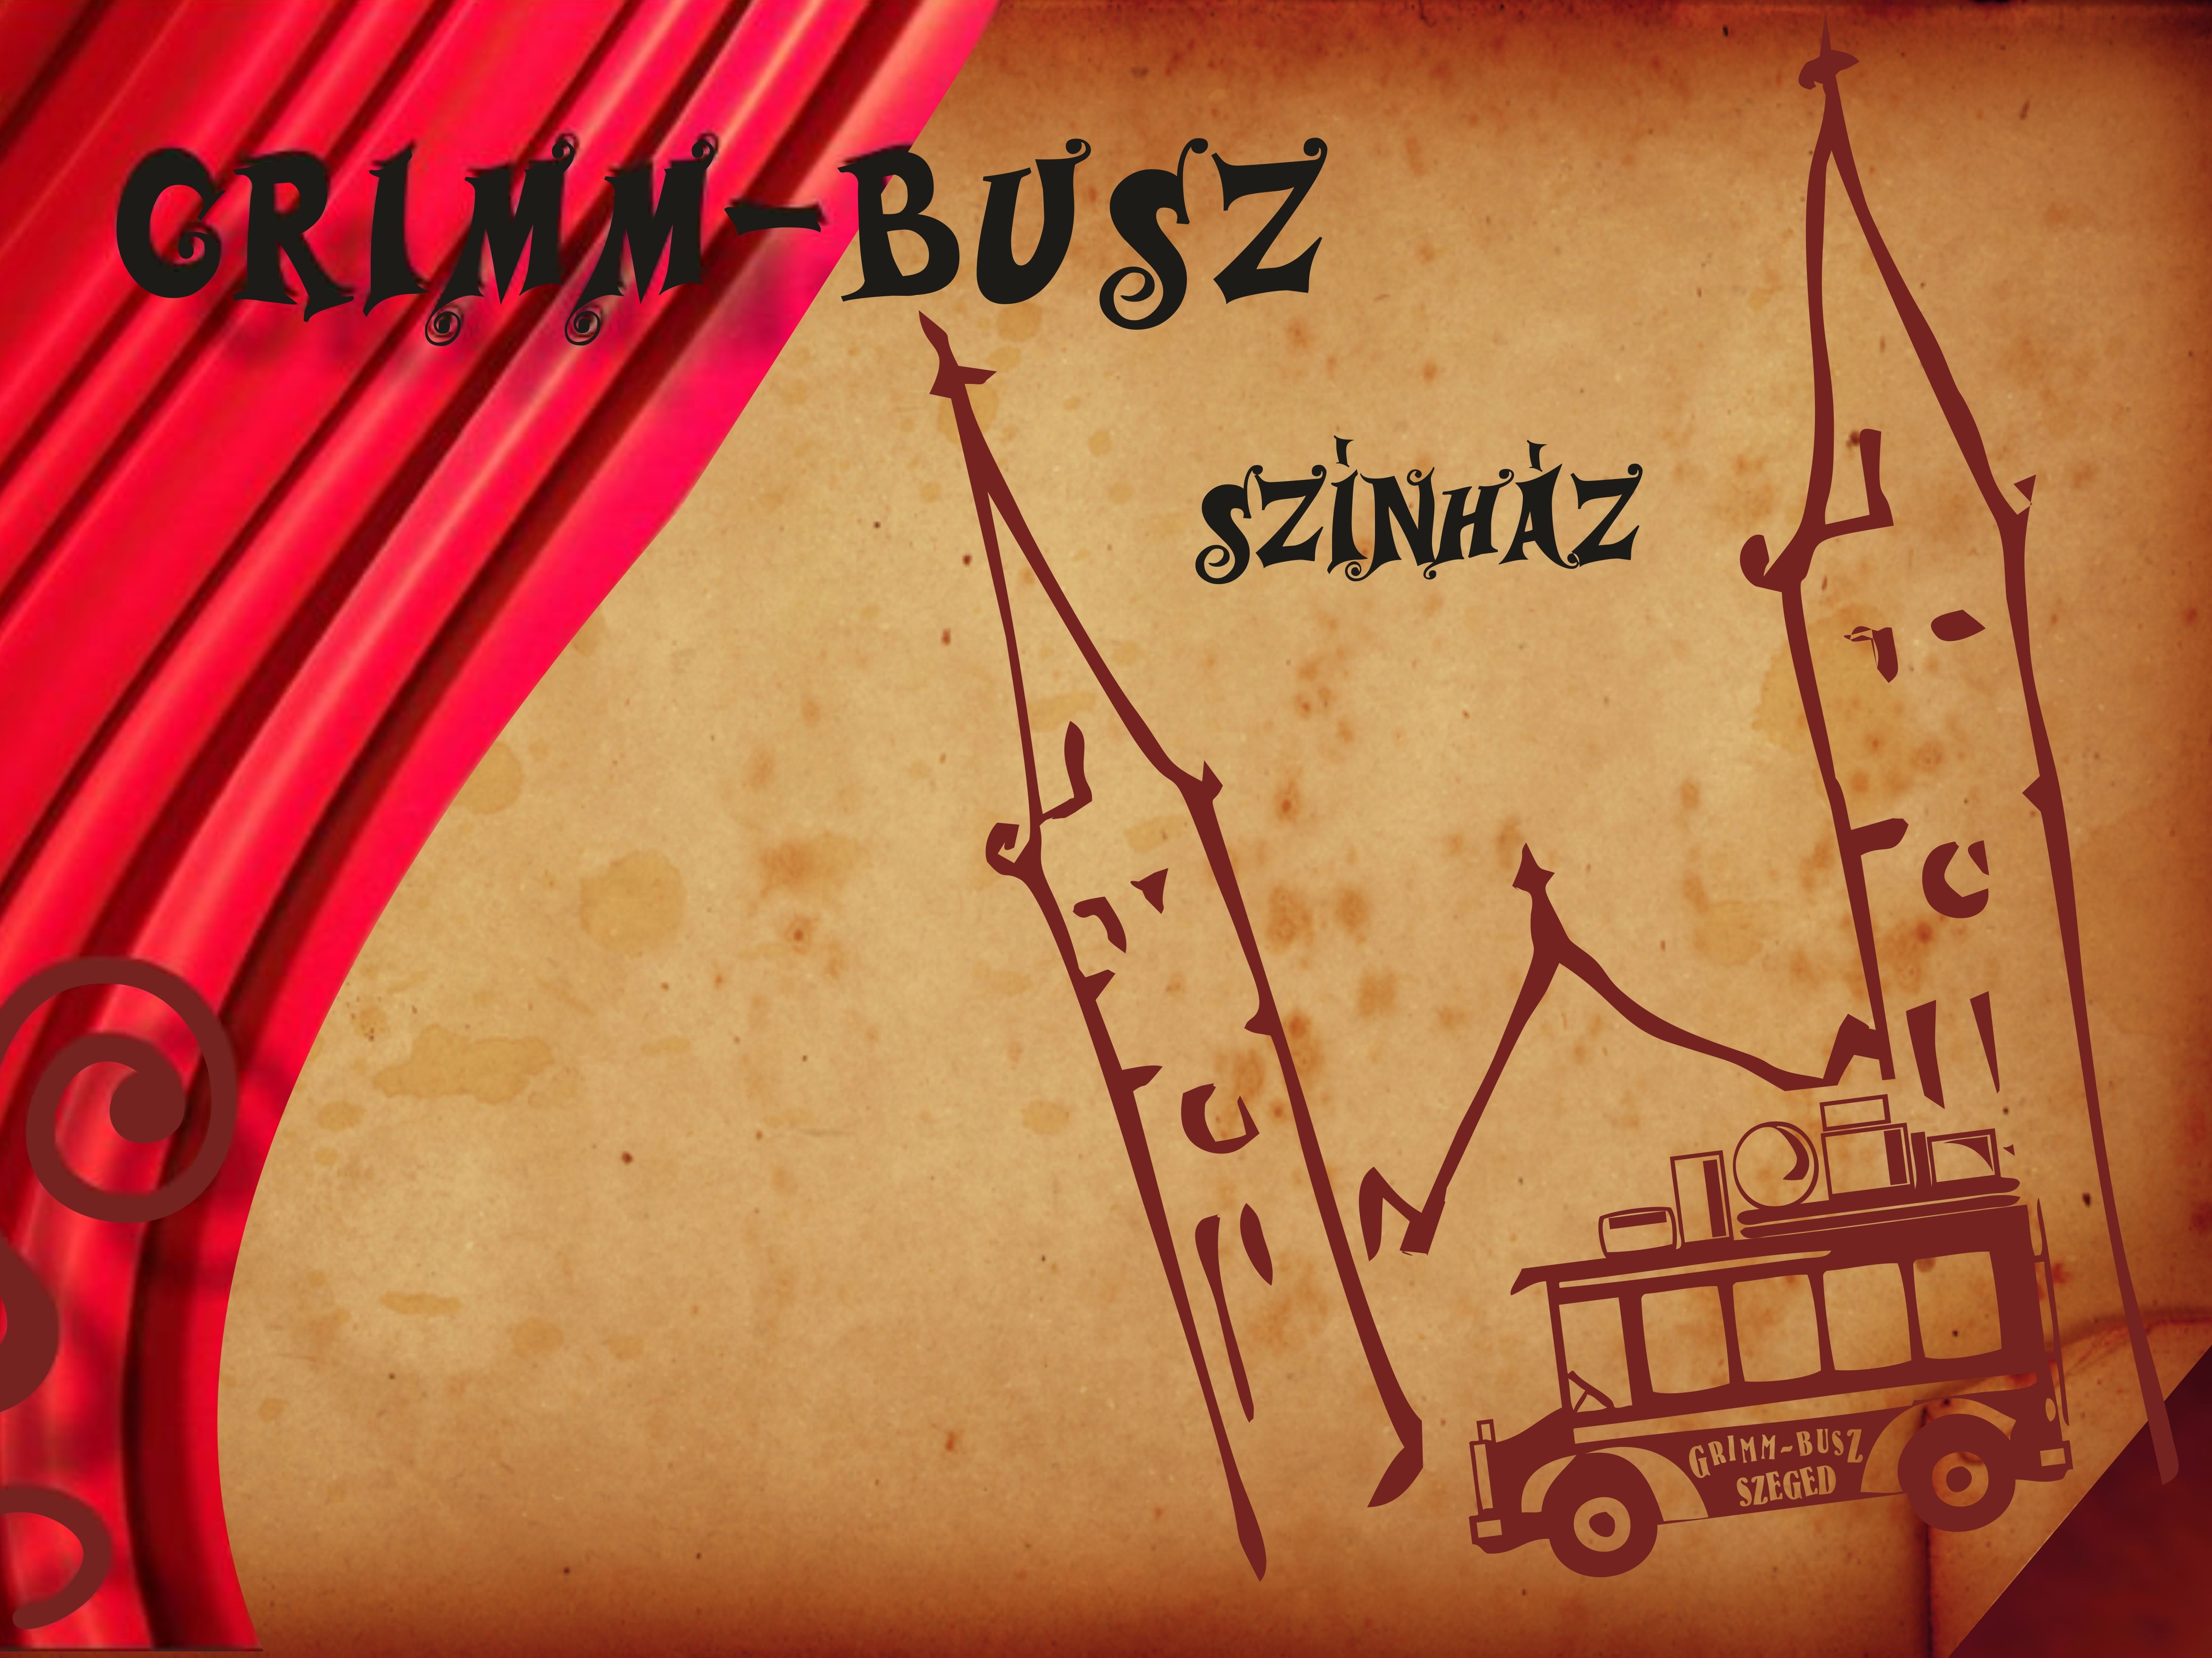 Grimm-Busz Buli